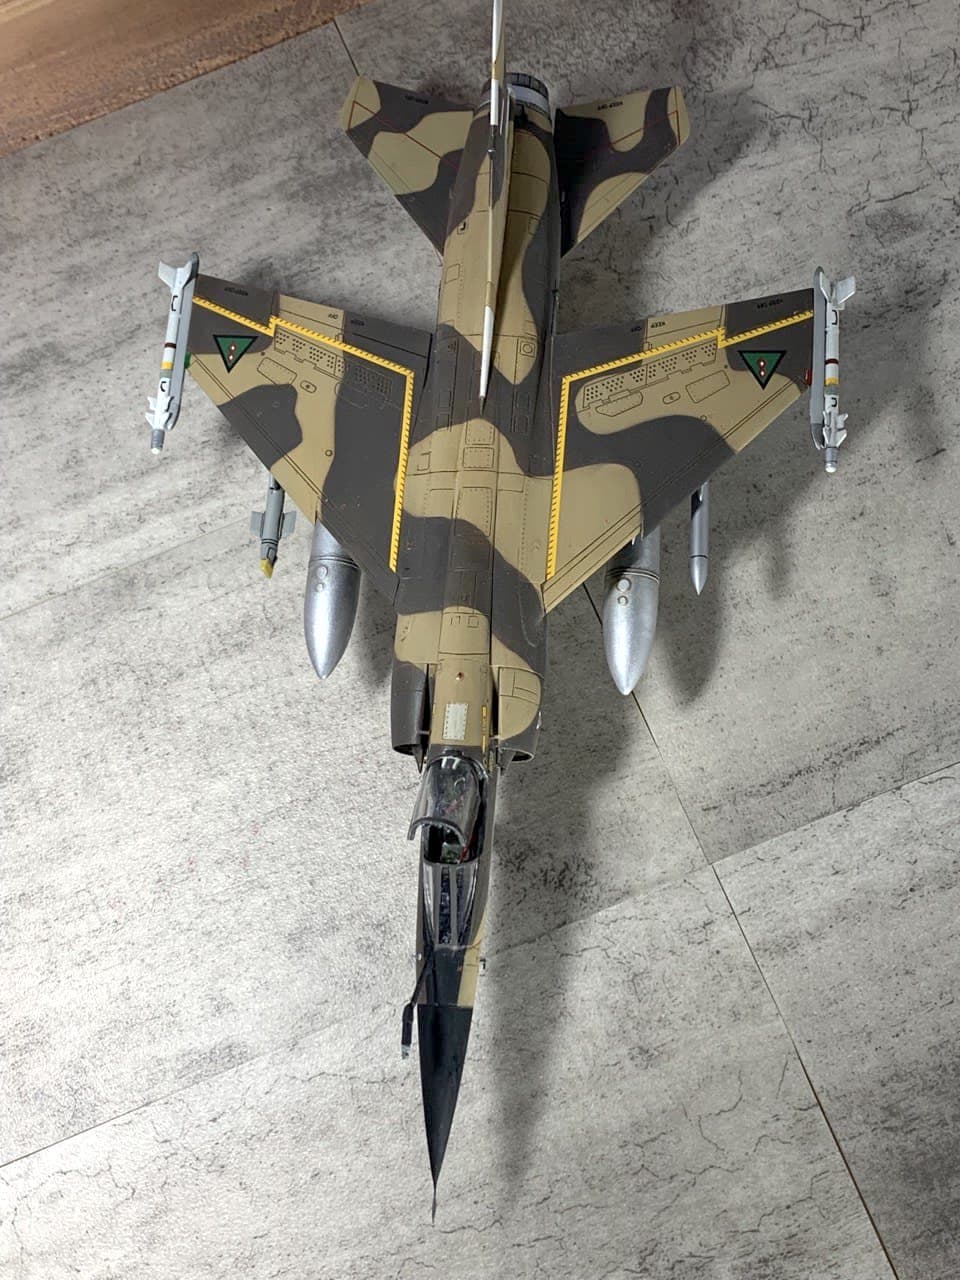  [Special Hobby+Yahu+RESKIT+CMK] Mirage F1EQ4 ravitailleur - FINI - Page 2 Photo_13